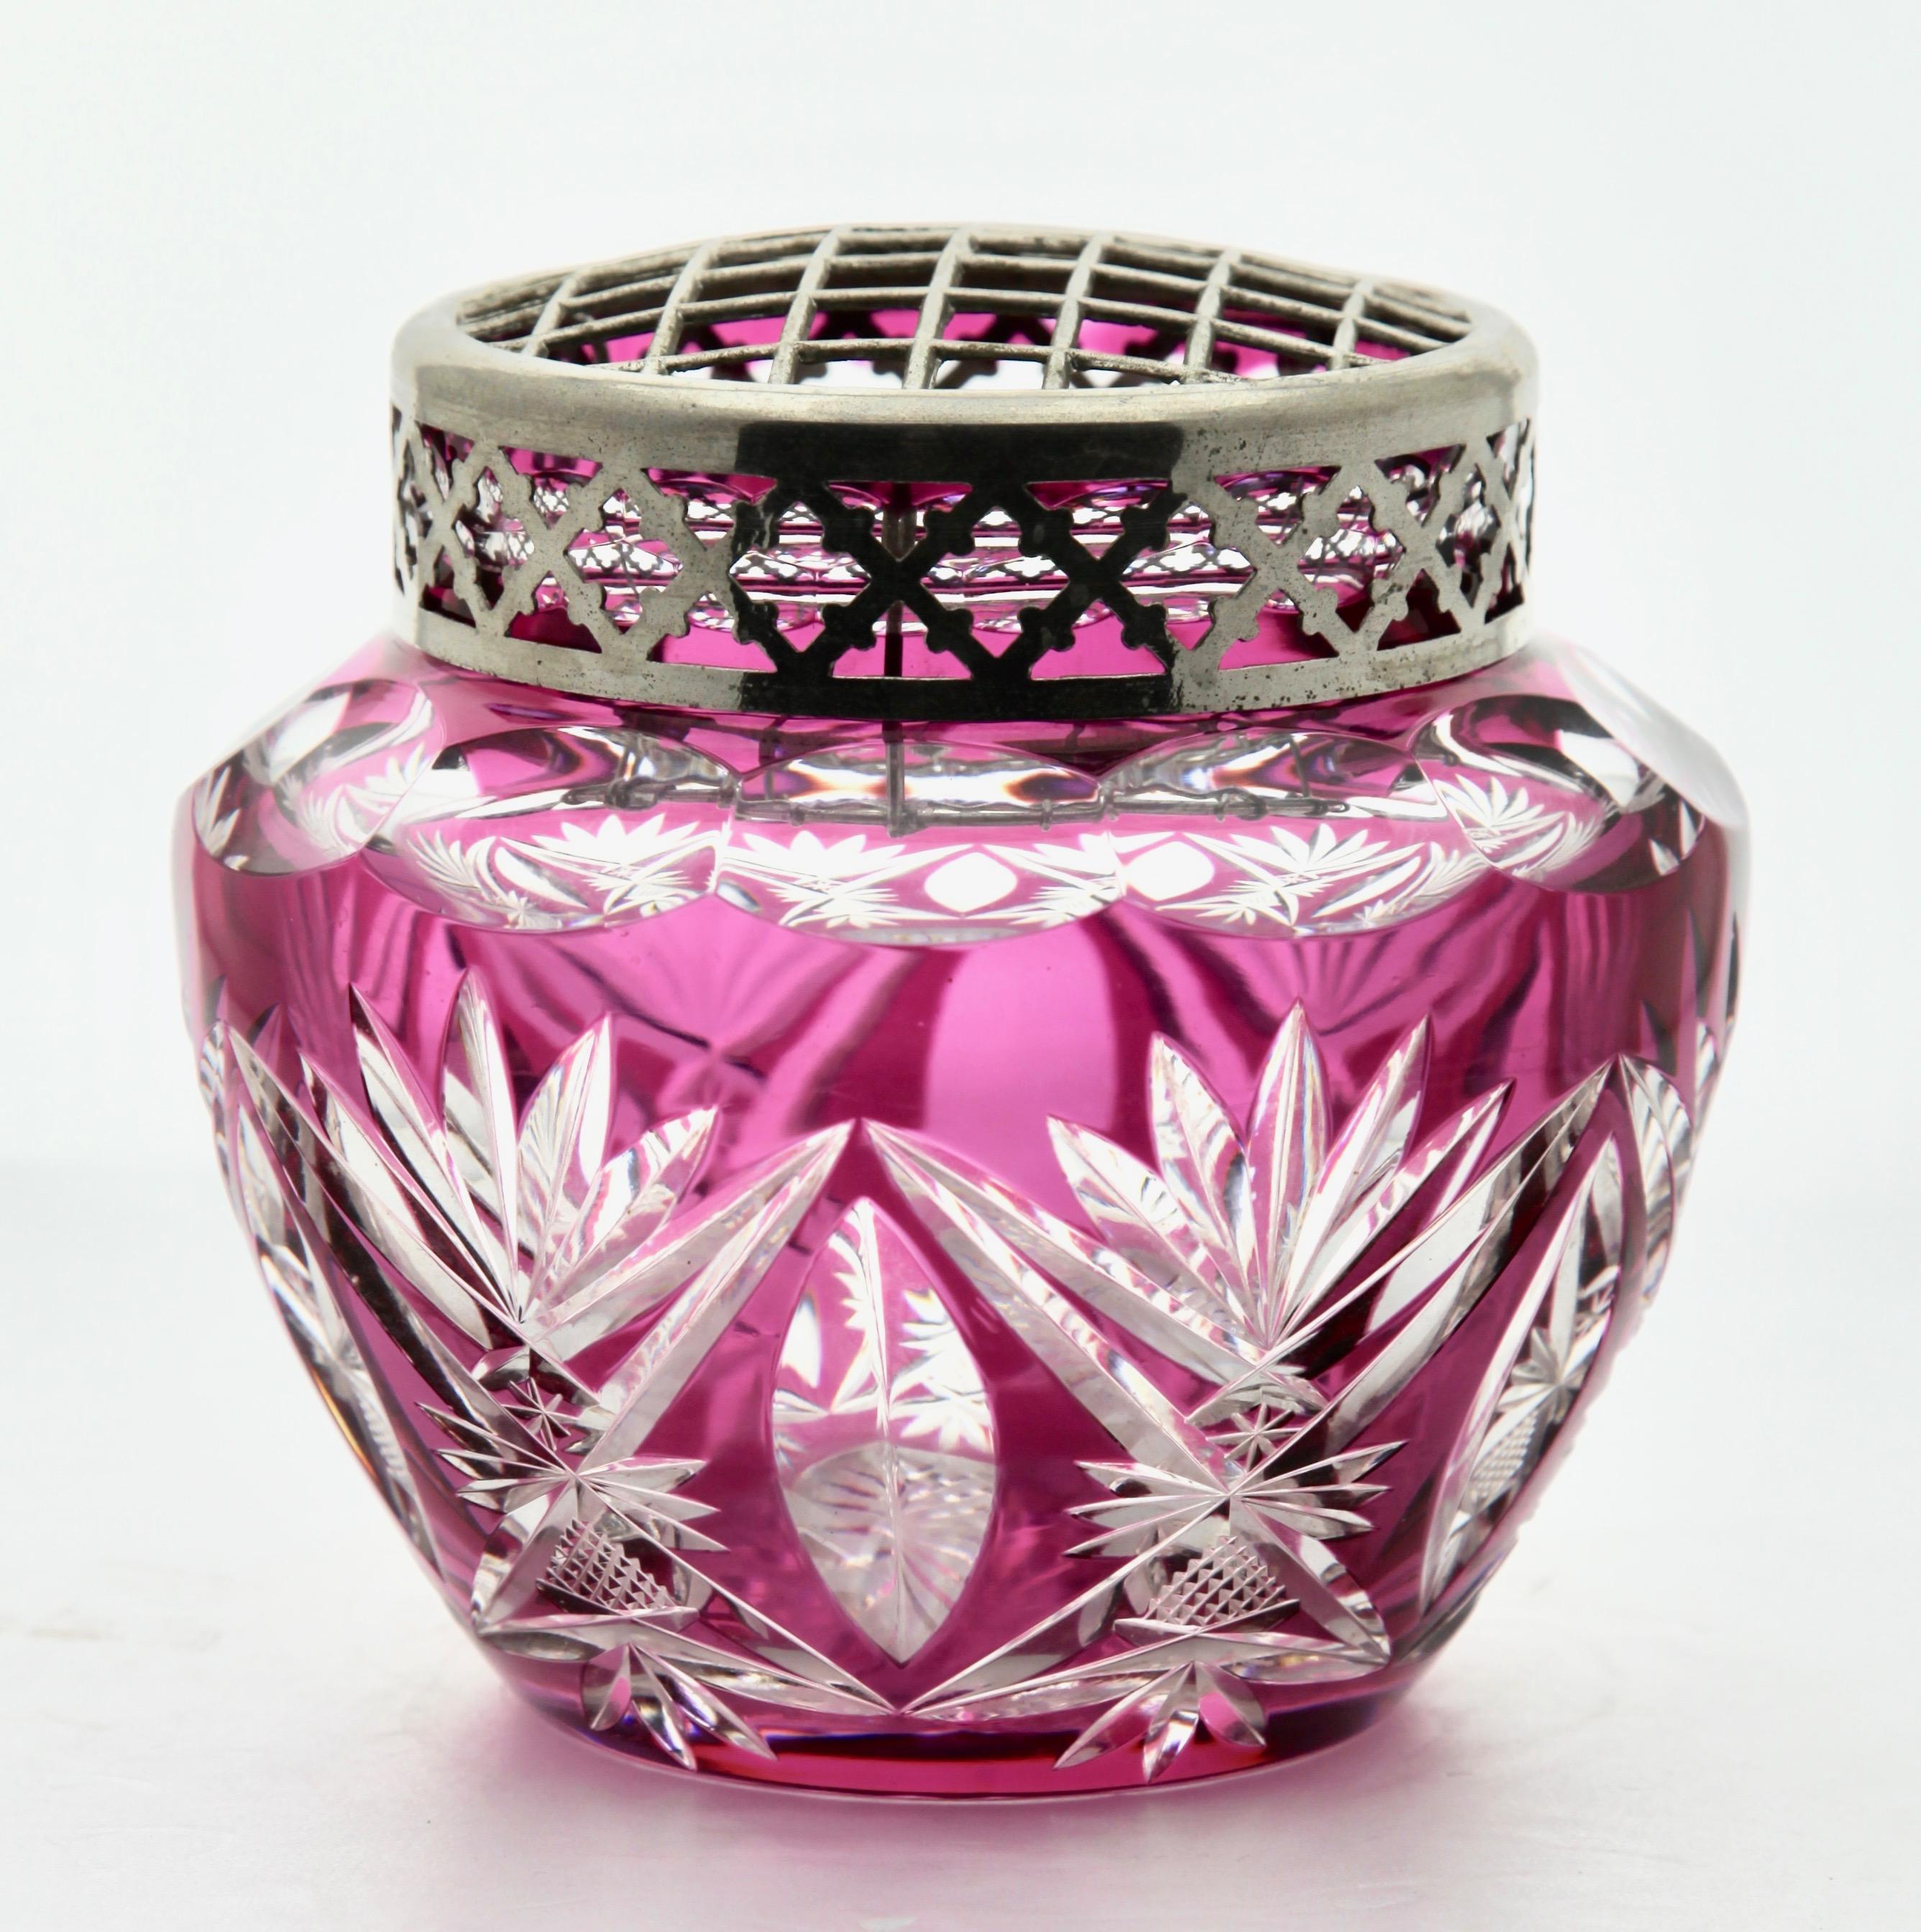 Belgian Val Saint Lambert Crystal 'Pique Fleurs' Vase in Amethyst with Grille, 1930s